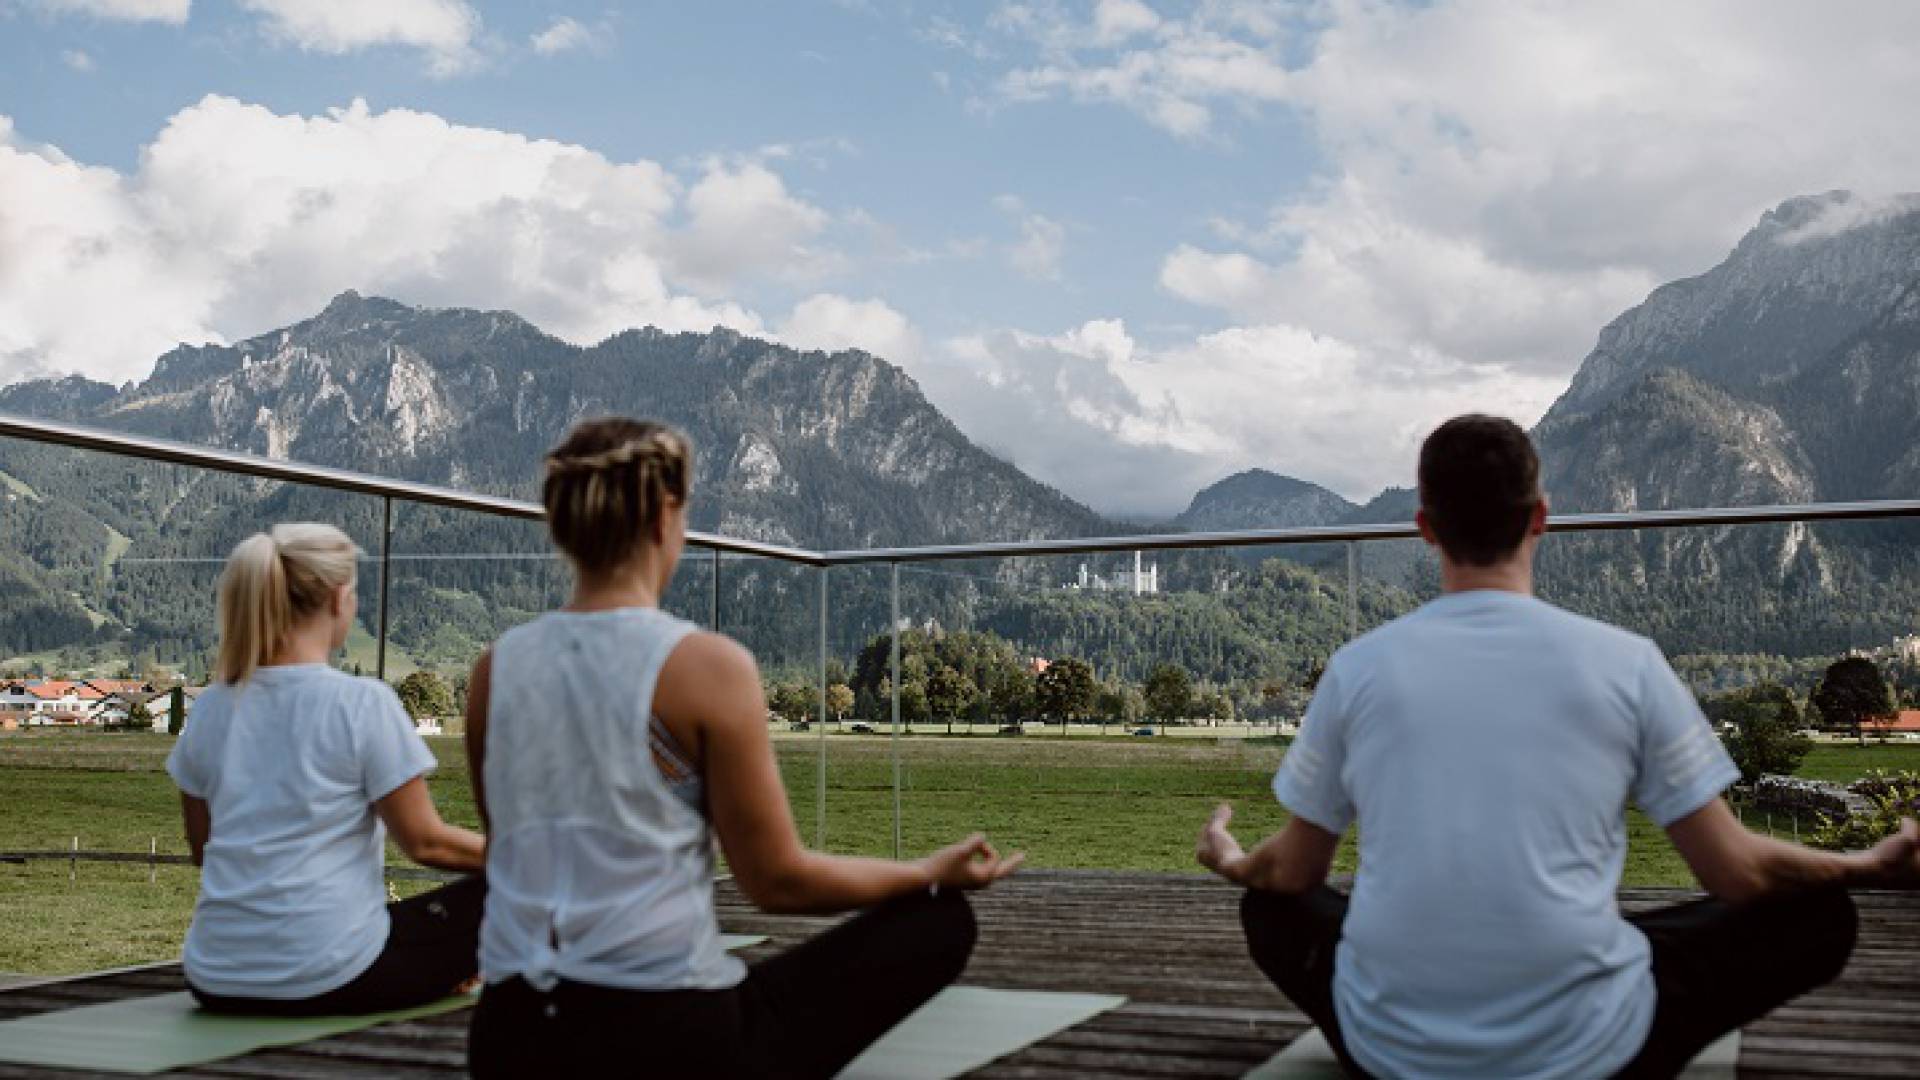 Yoga mit Blick aufs Schloss - Personen machen Yoga im Feiern